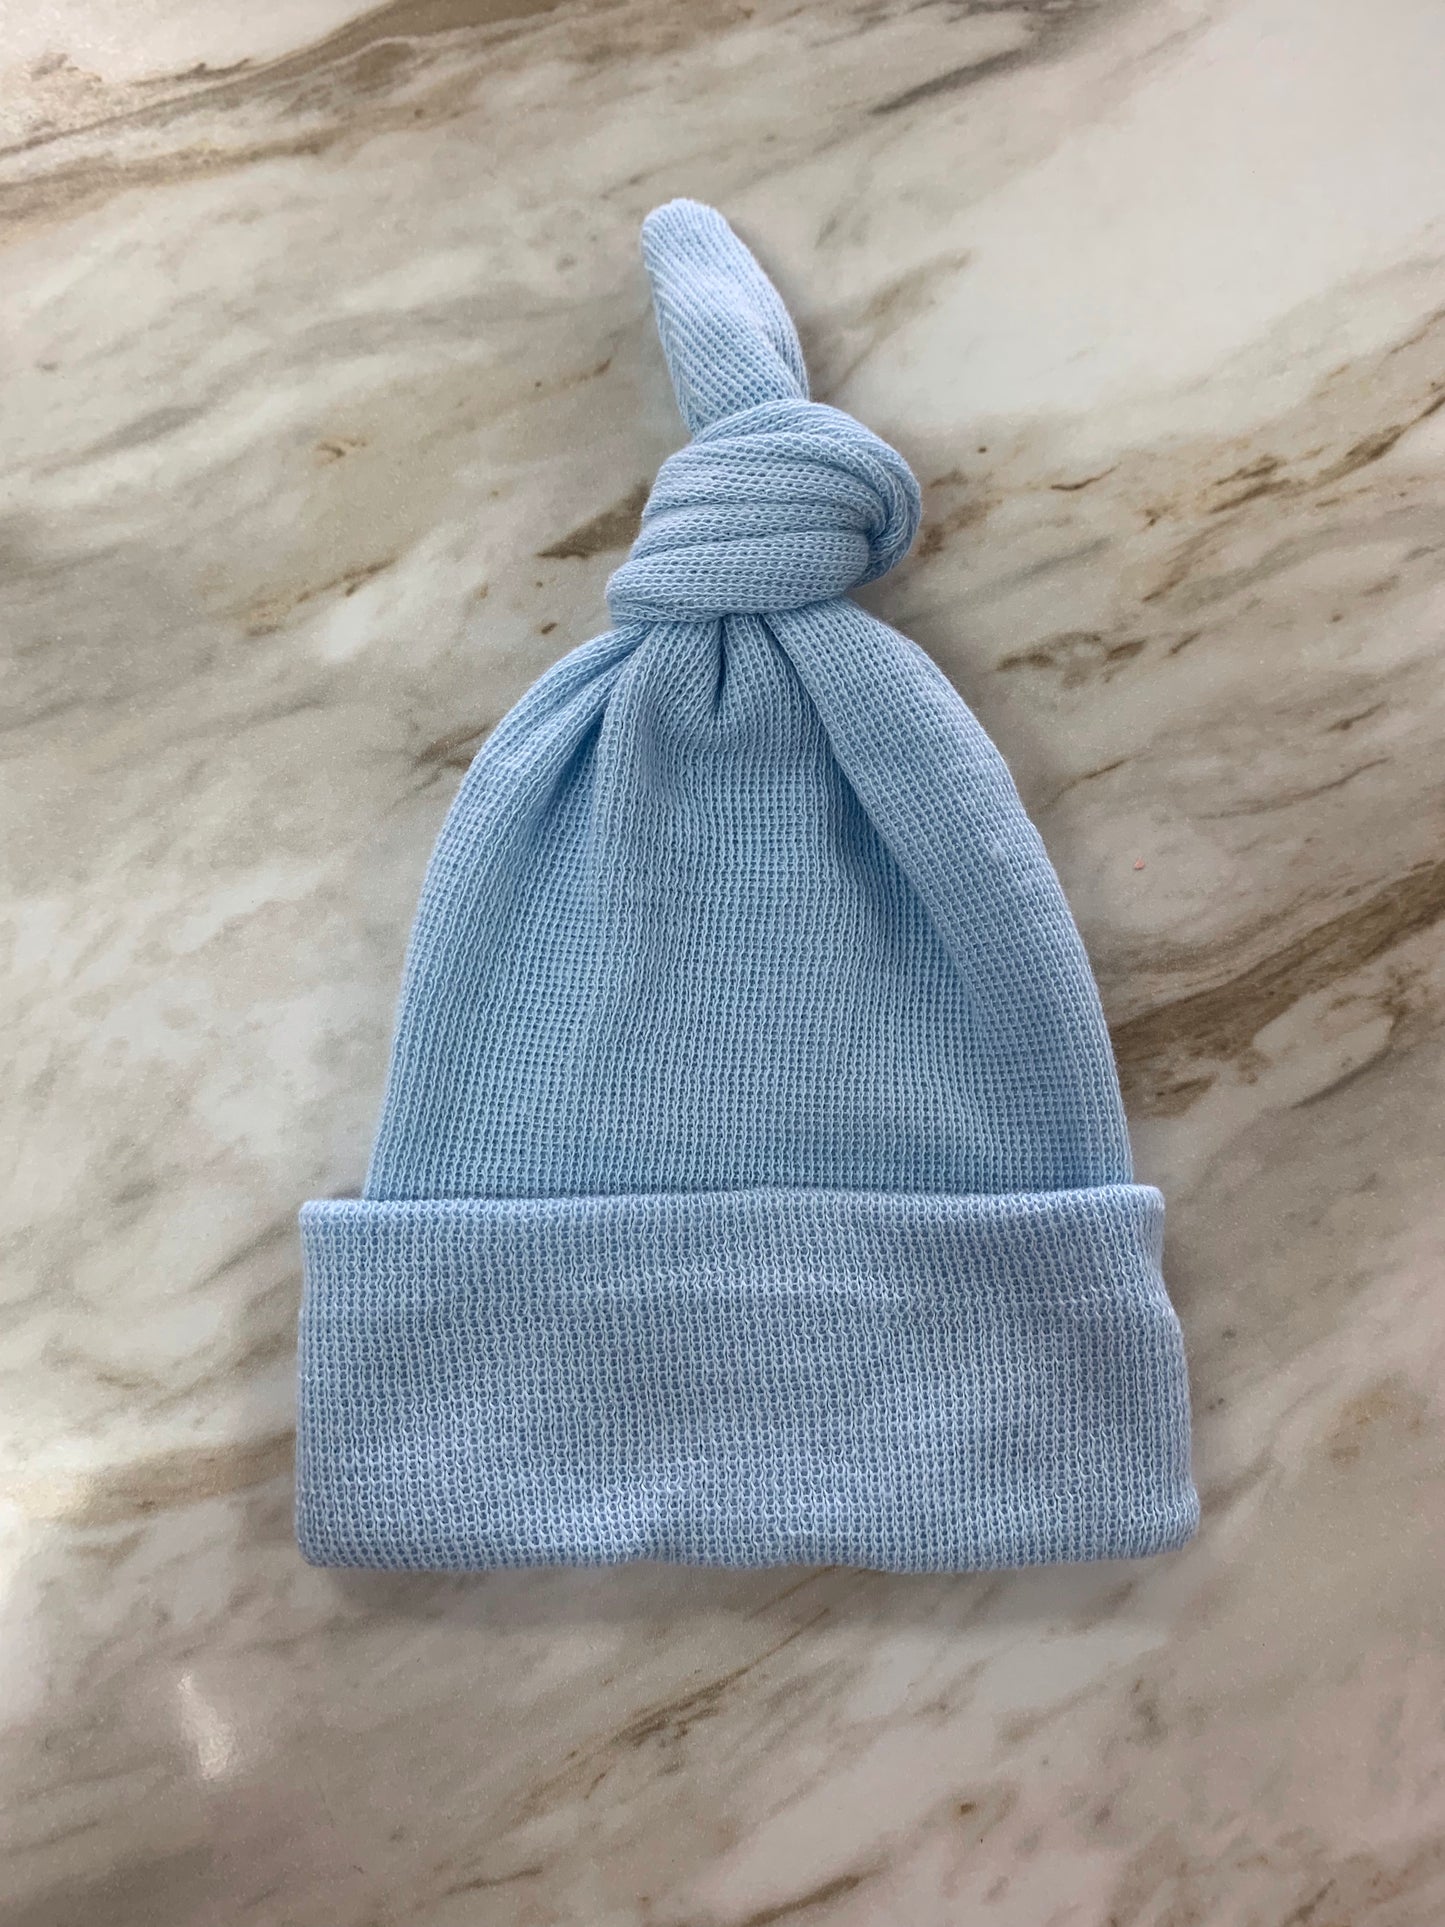 Blue Top Knot Newborn Hat Blue Top Knot - Doodlebug's Children's Boutique